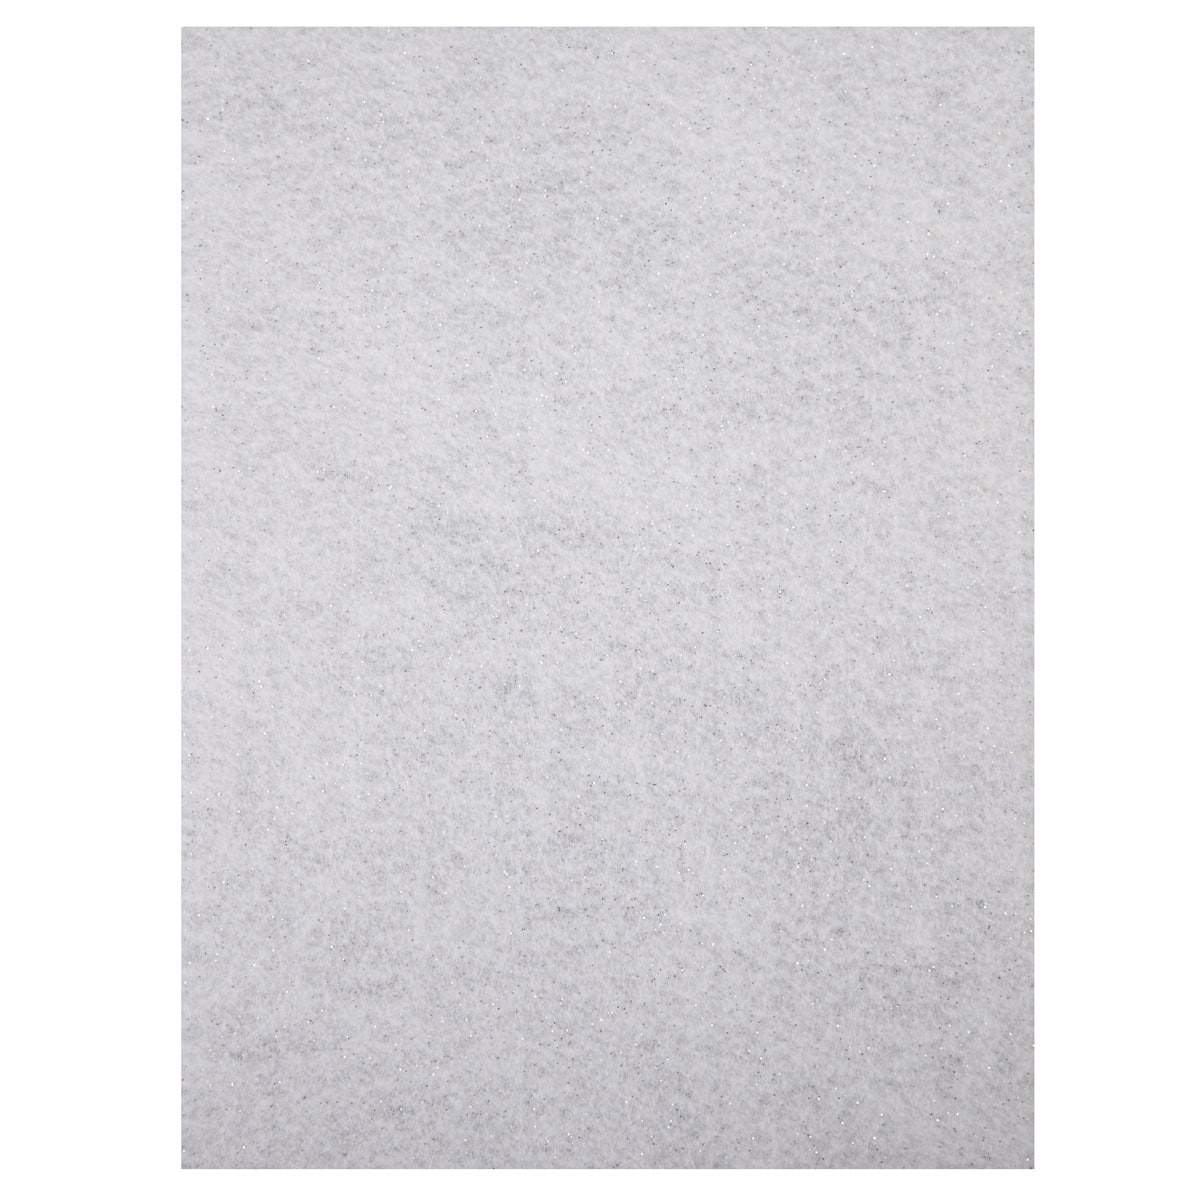  Glitter Wool Craft Felt - 9.5” x 12” Sheet - Purple